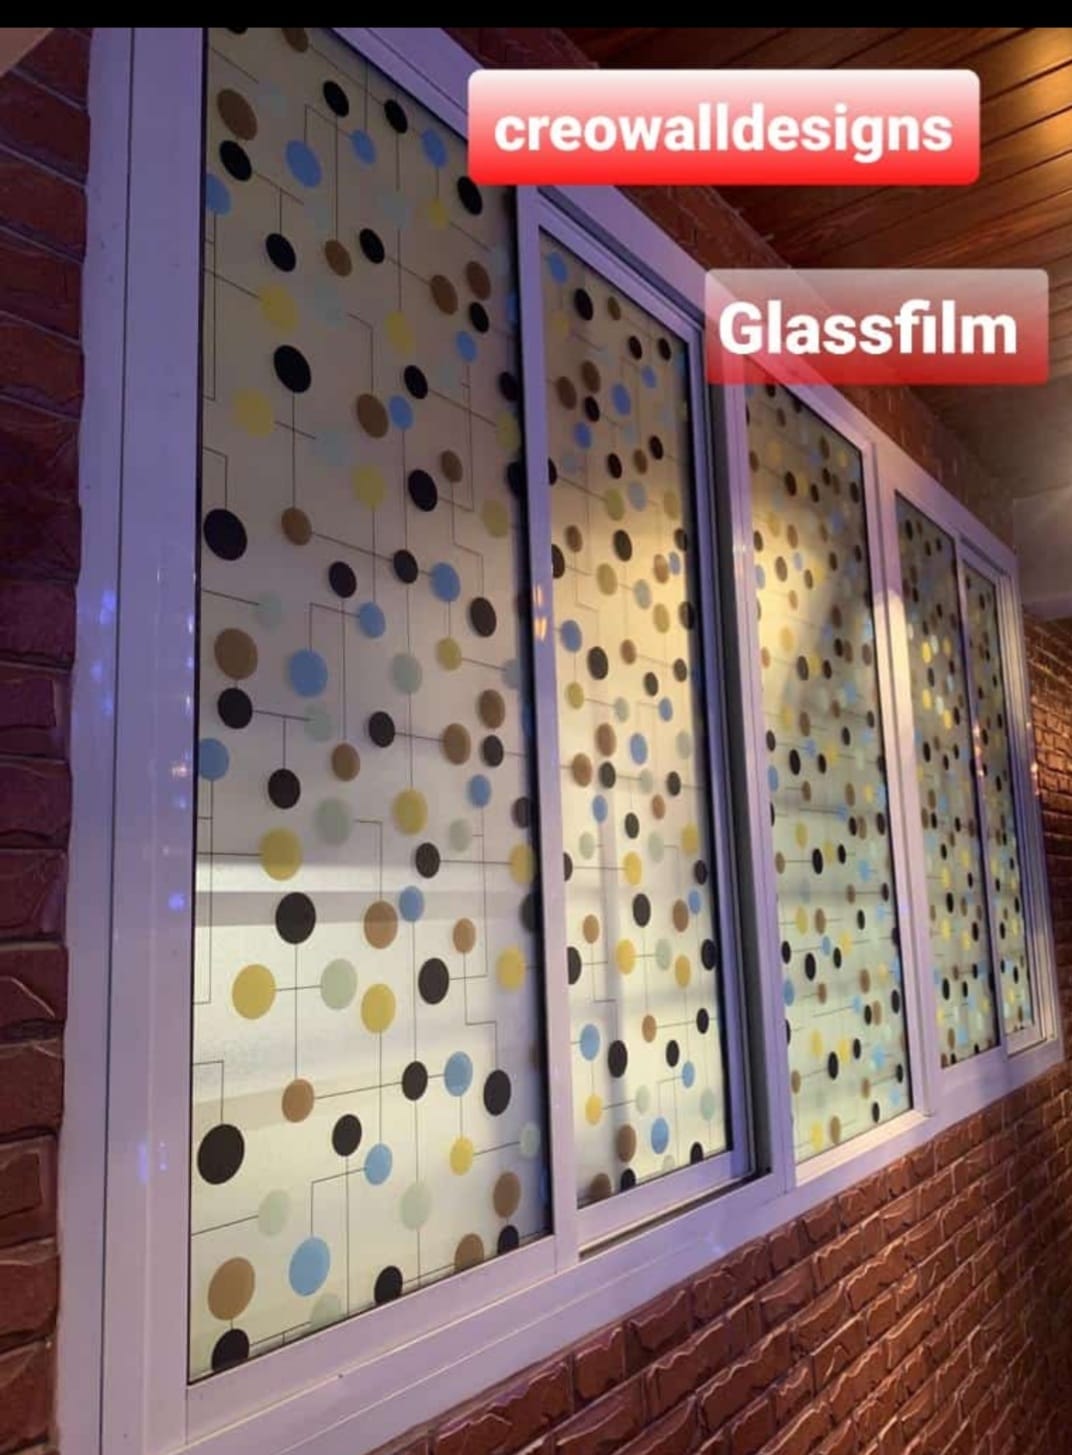 Glass Films Works Gallery